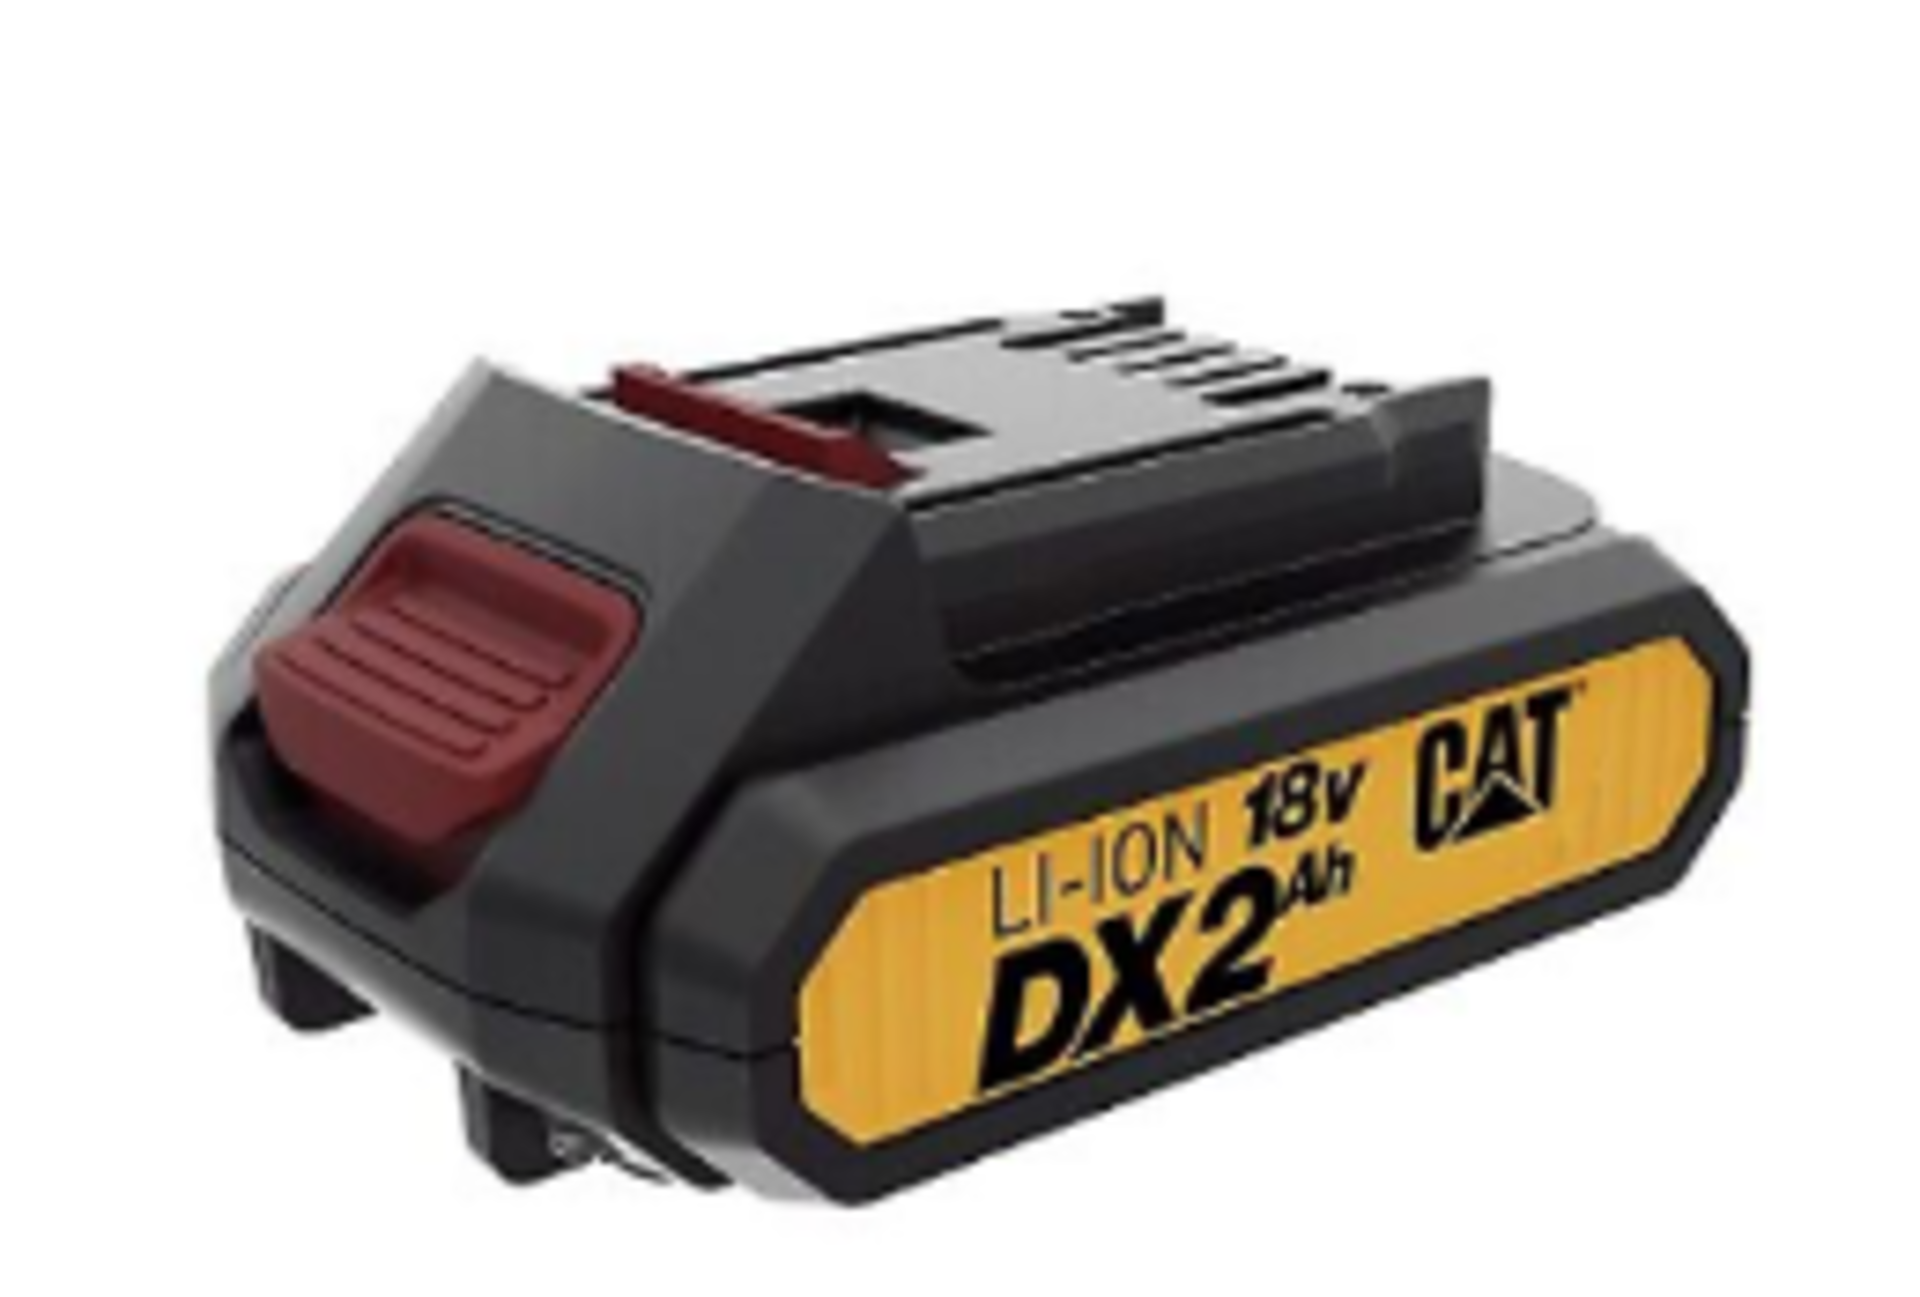 RRP £40 Brand New Boxed Cat 18V Battery